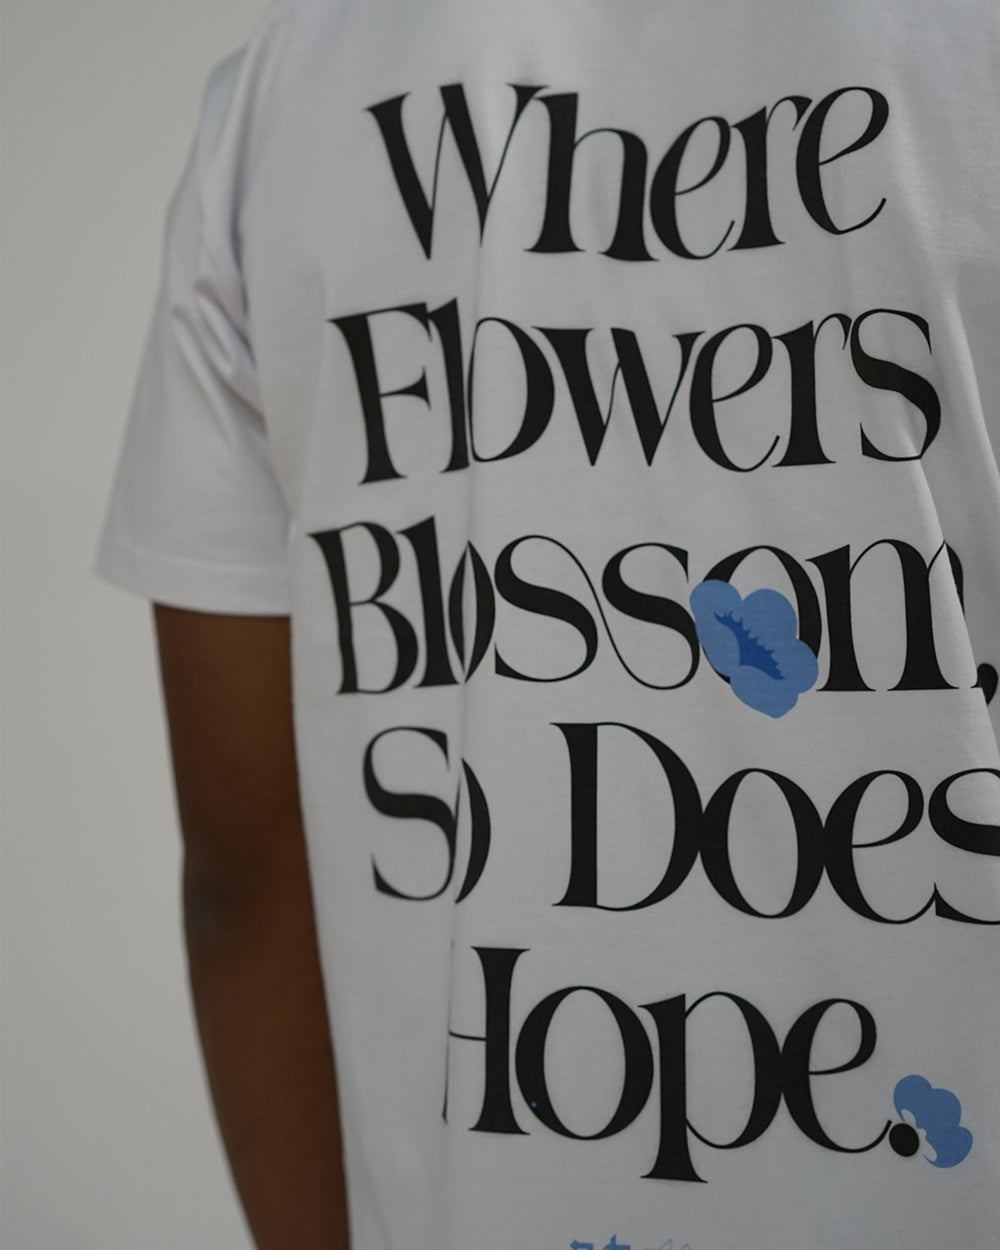 "Where Flowers Blossom, So Does Hope" T Shirt // White